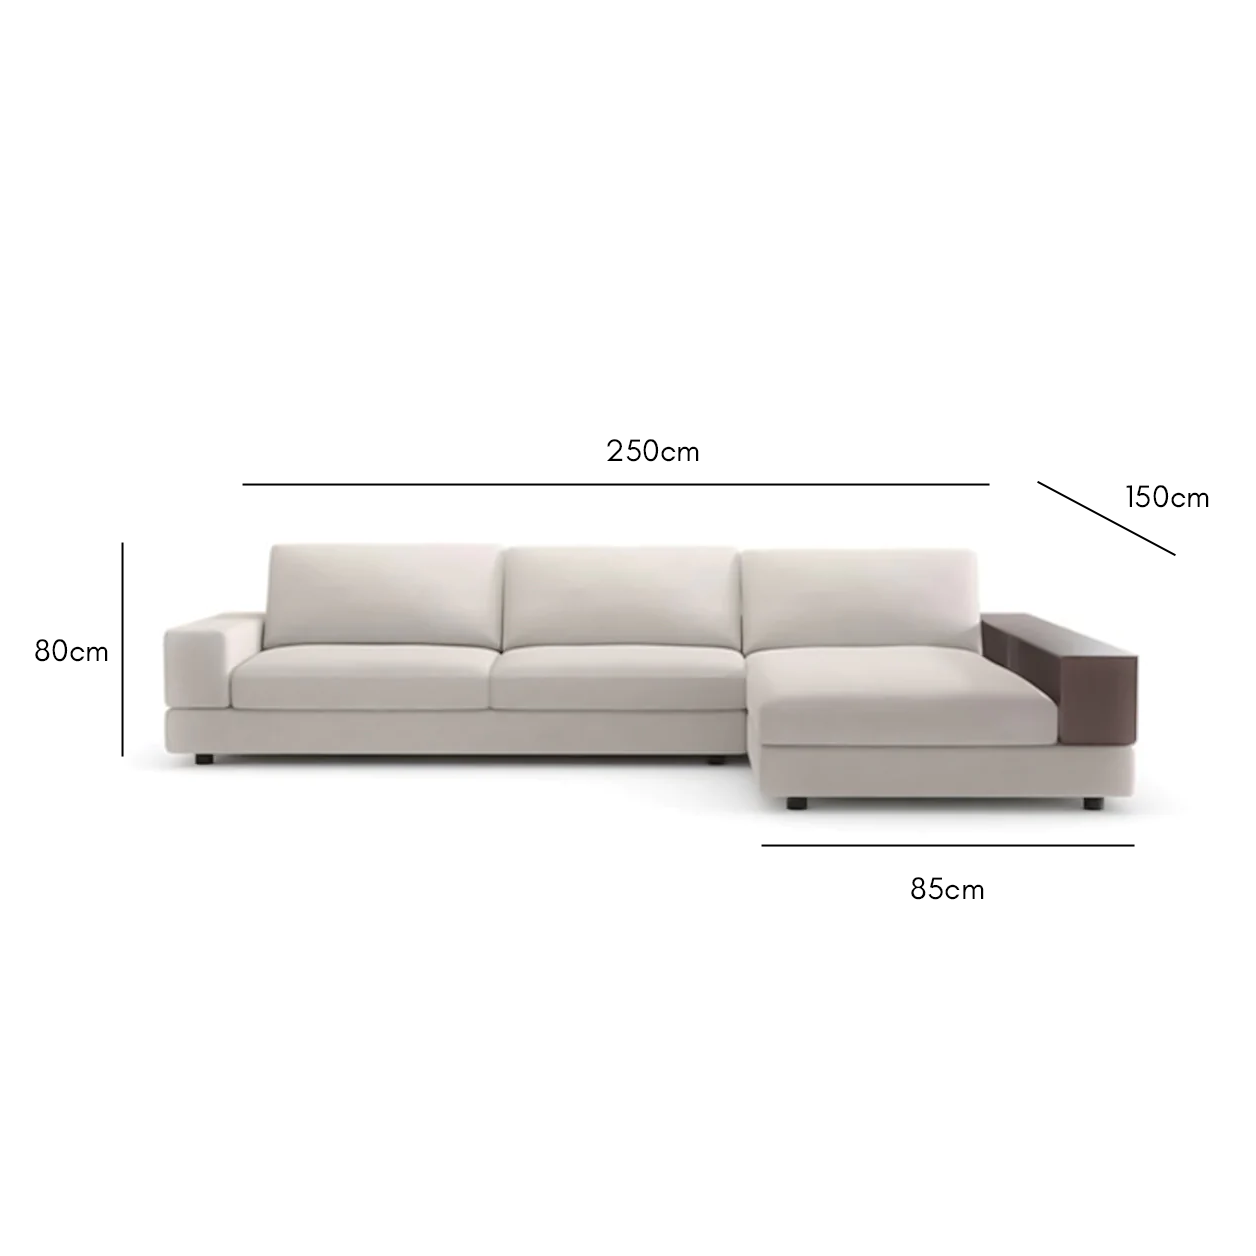 Beech Wood Corner Sofa 150 250 Cm